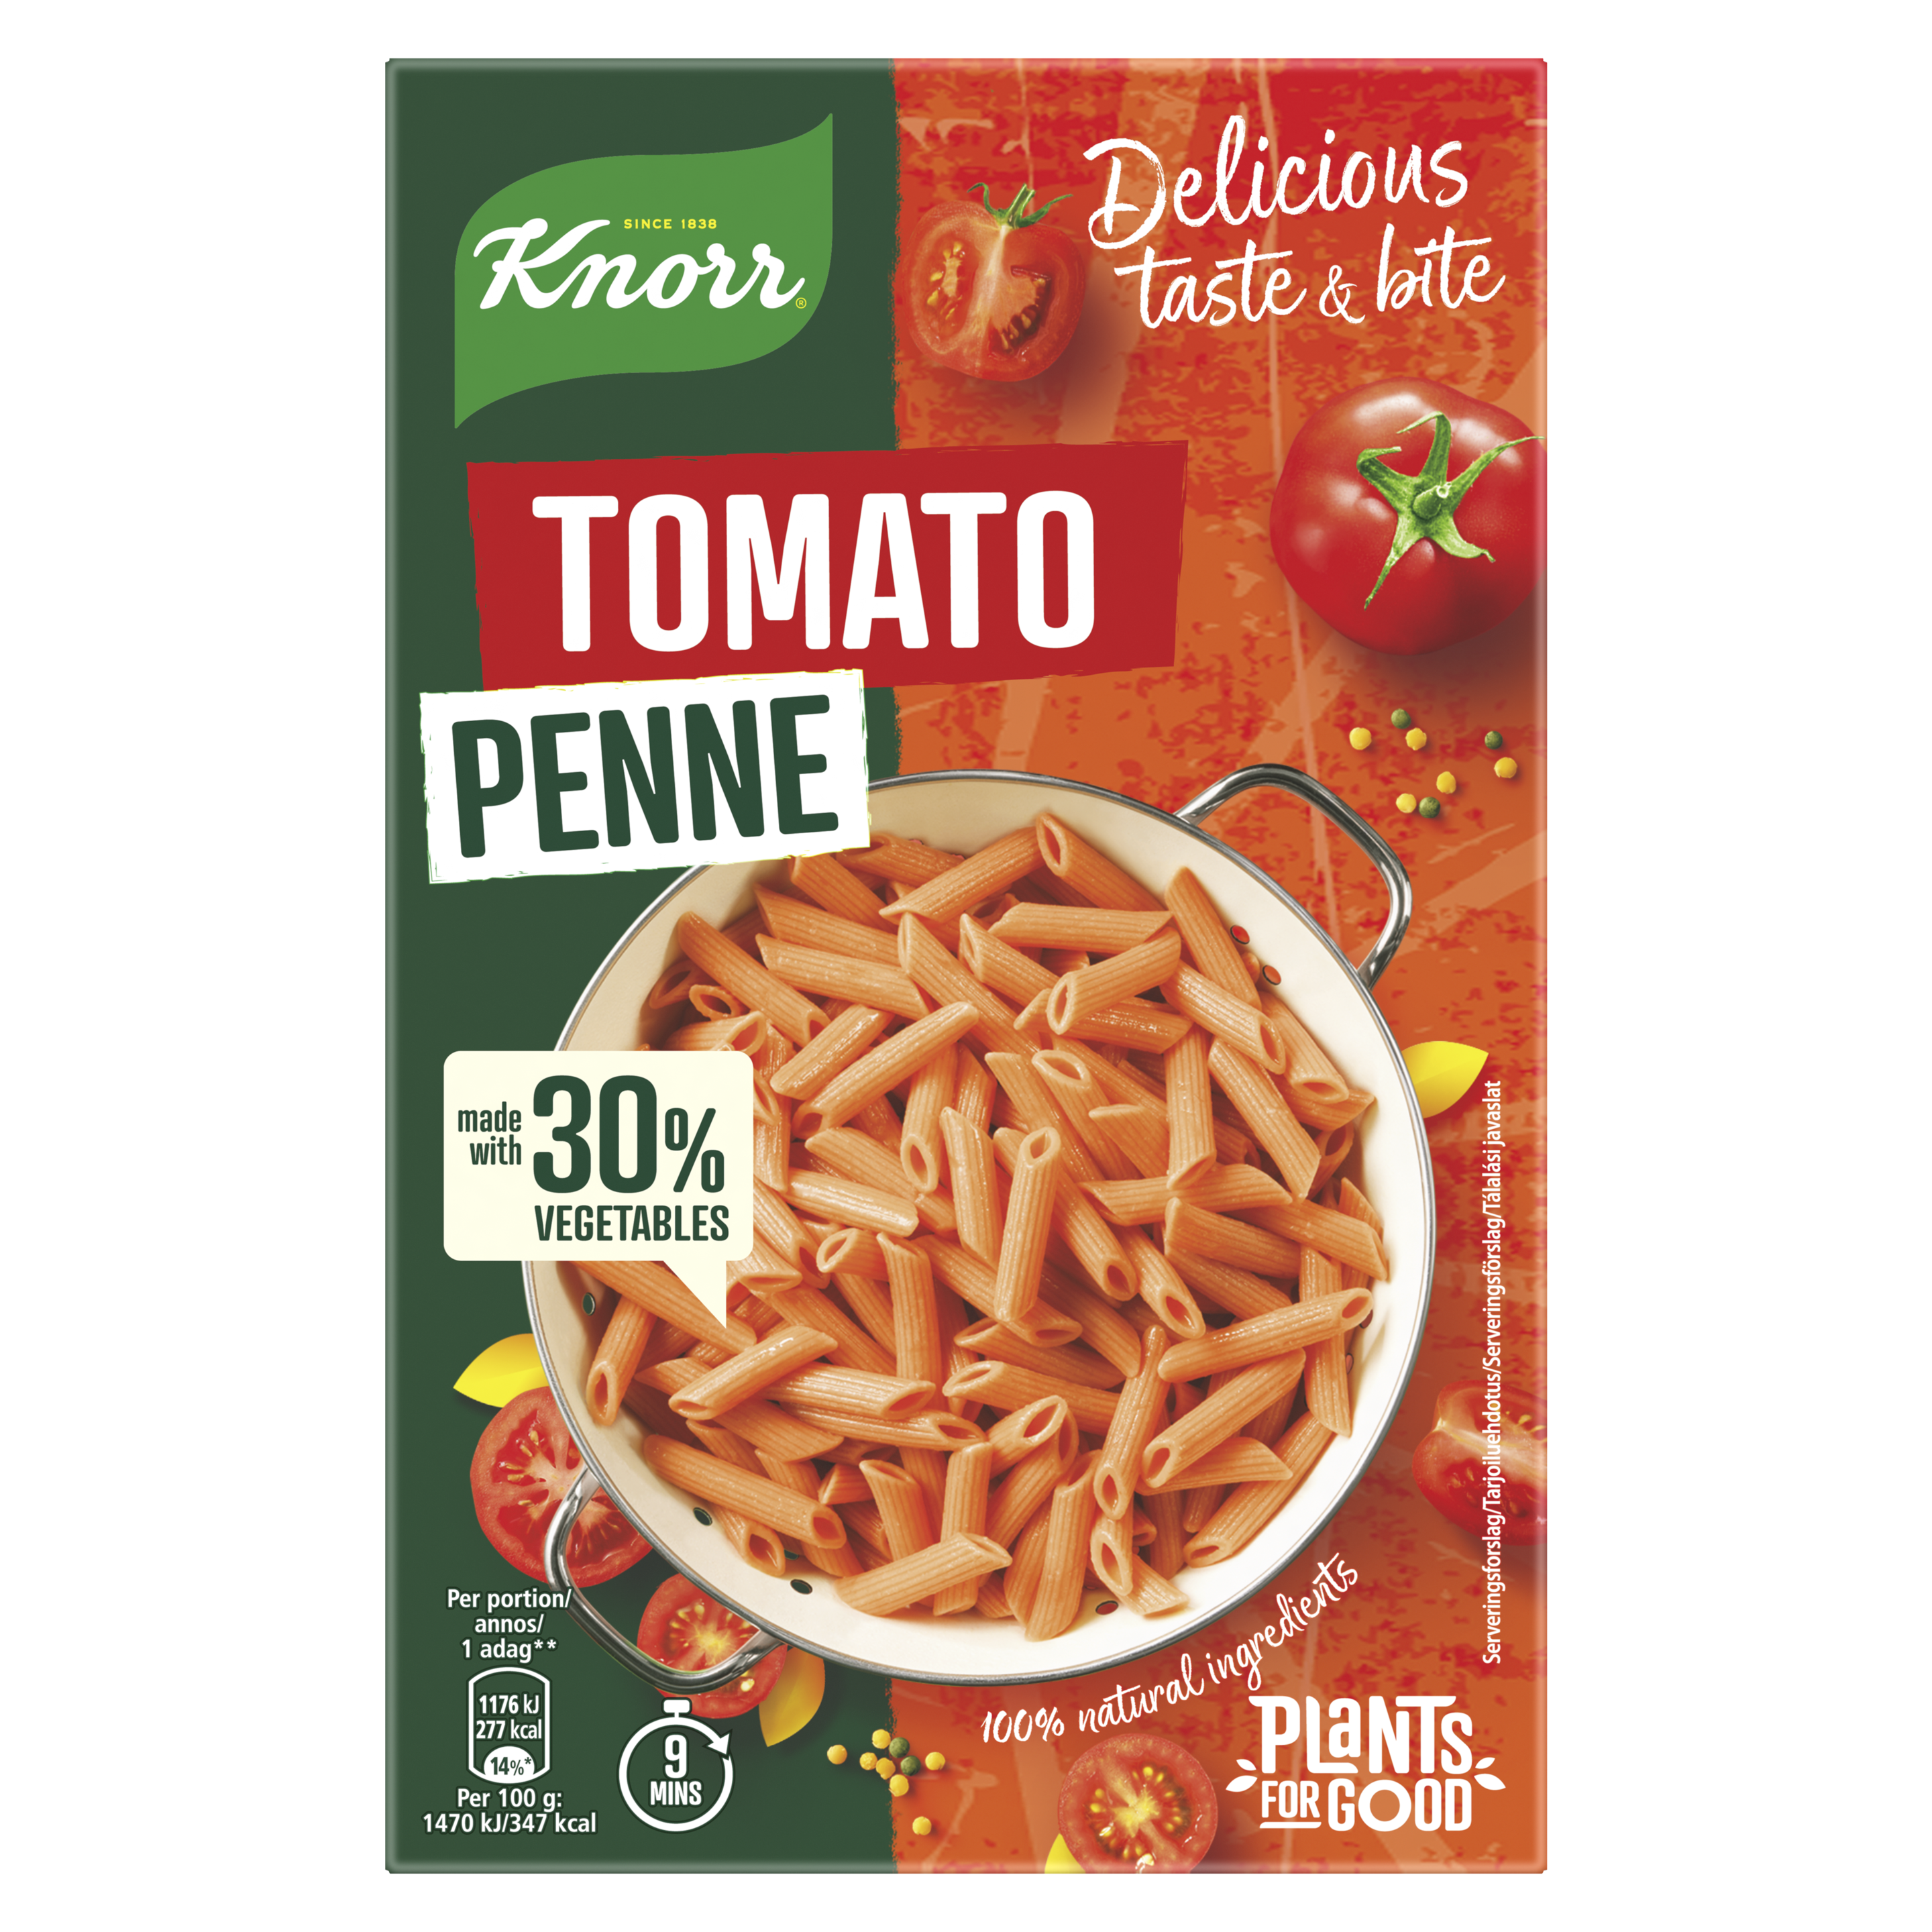 Tomato Penne